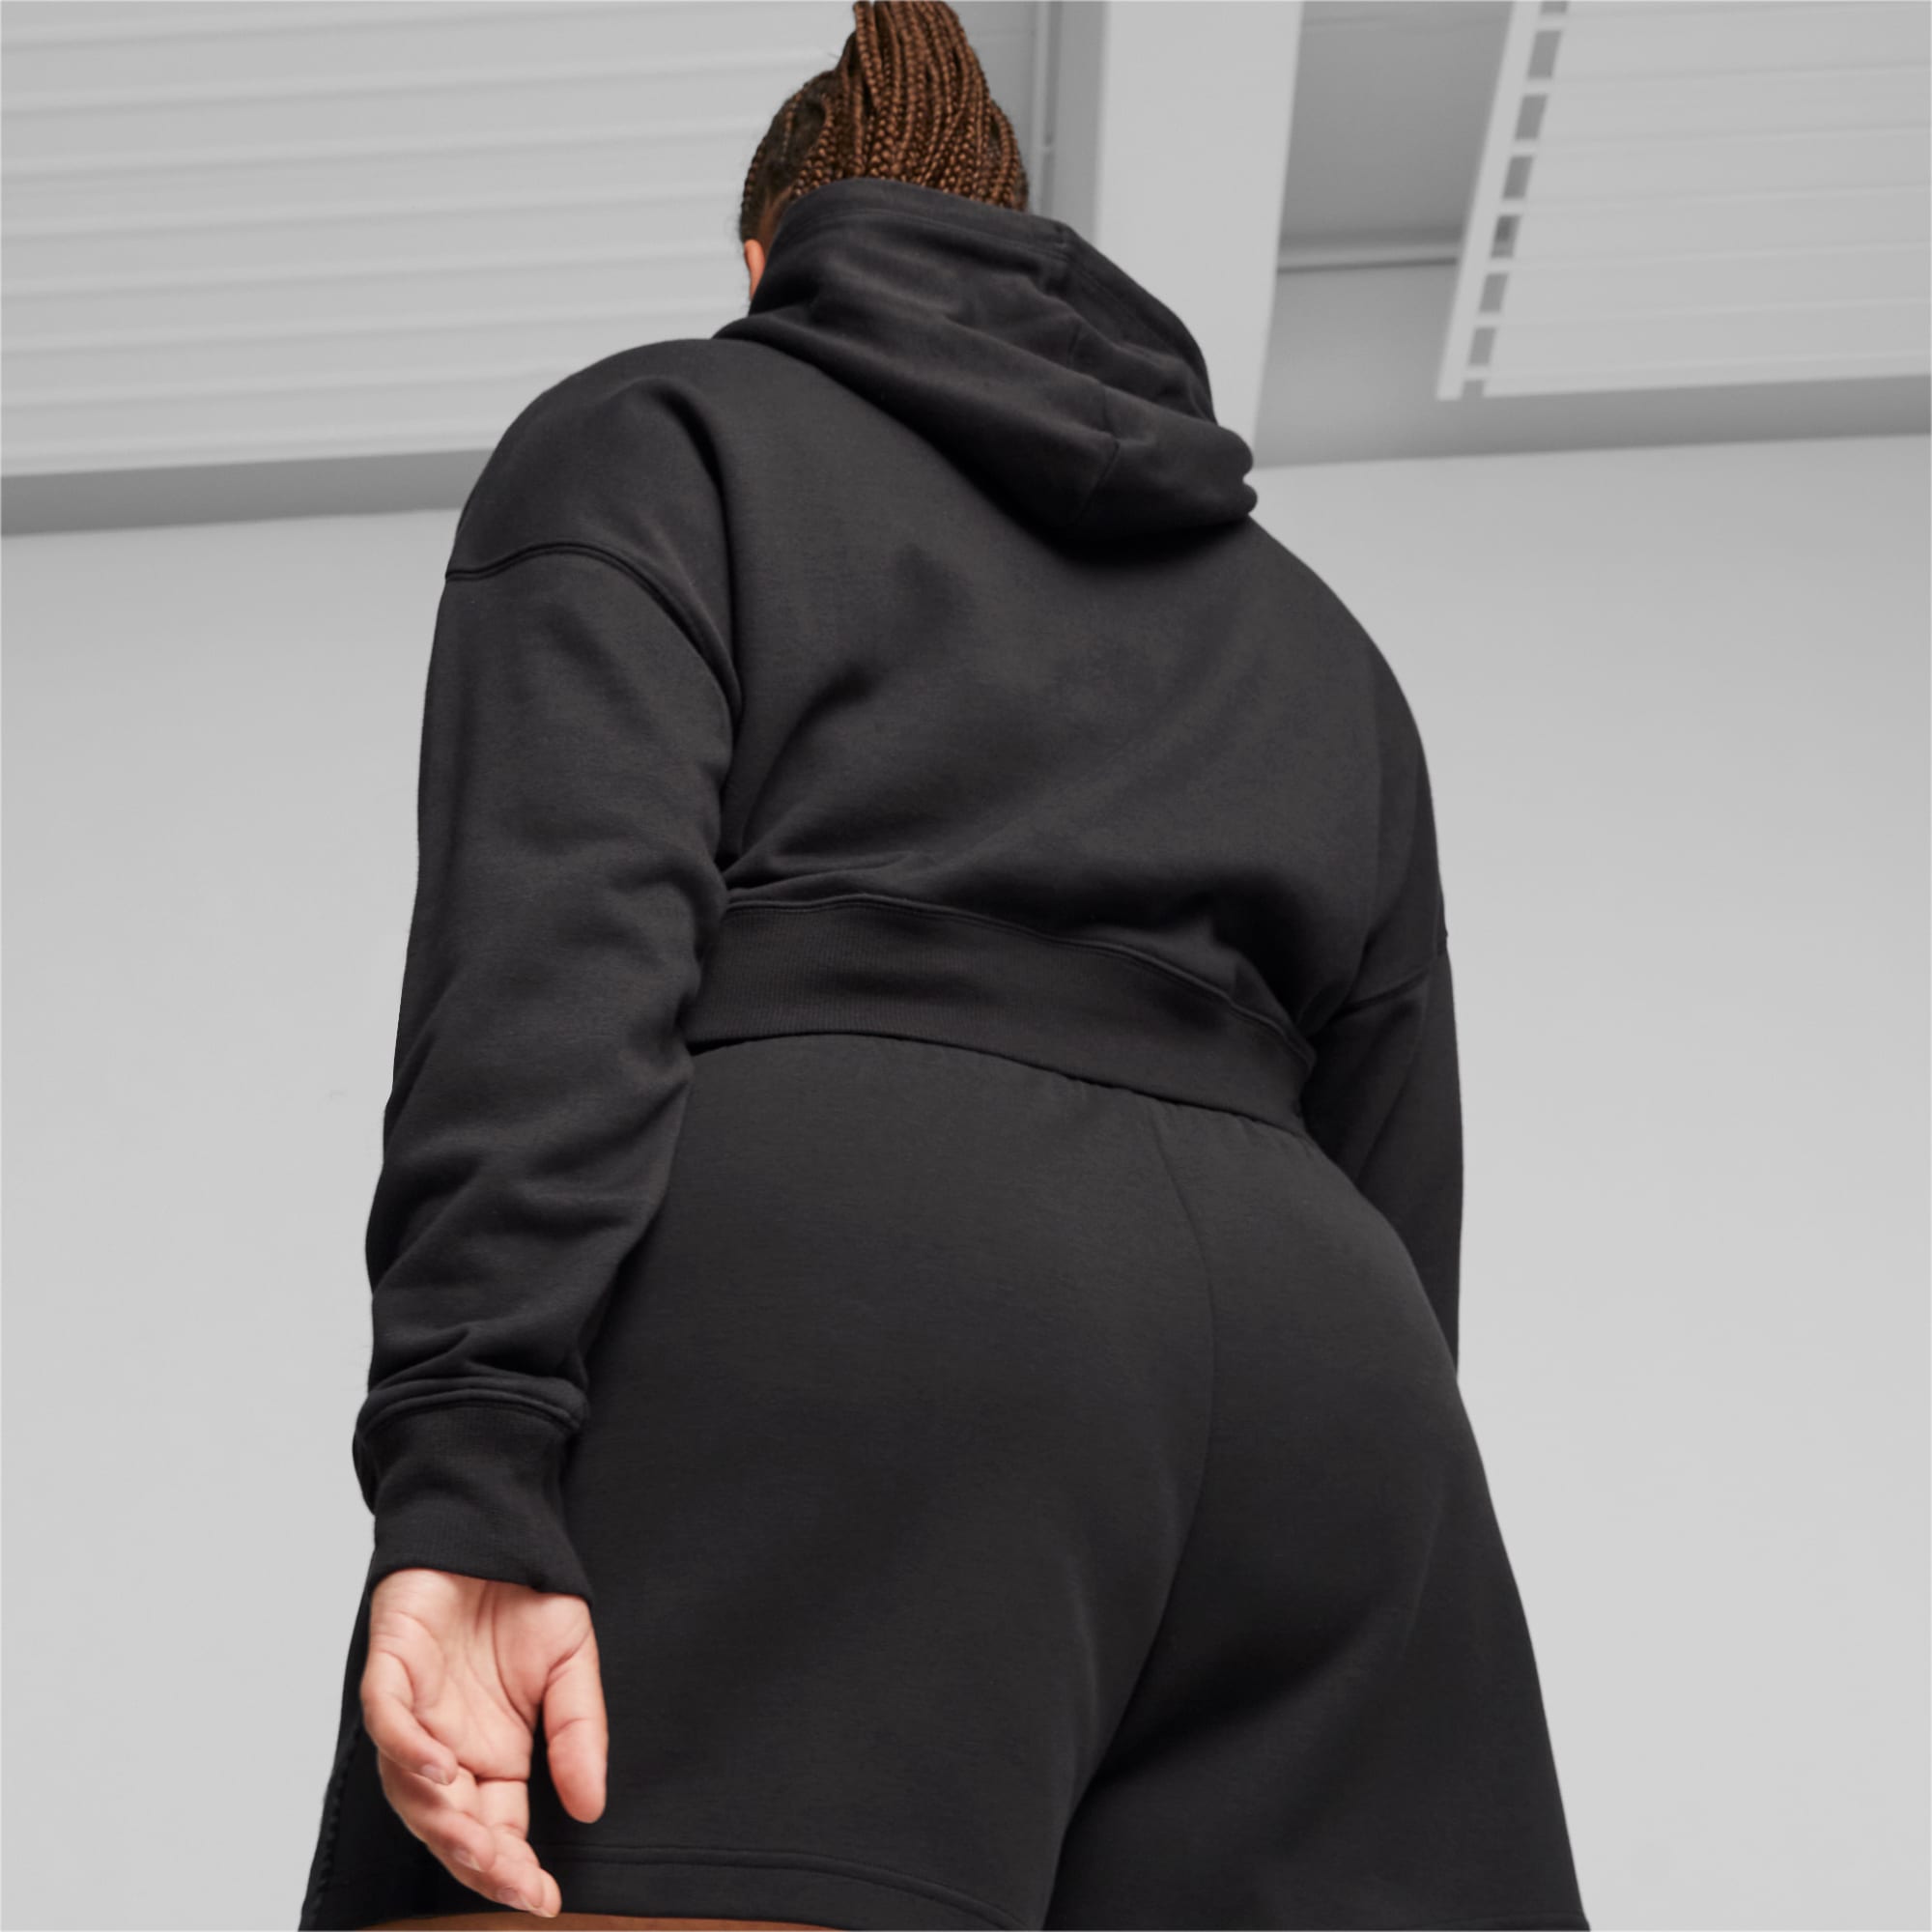 PUMA Classics Women's Cropped Hoodie, Black, Size S, Clothing